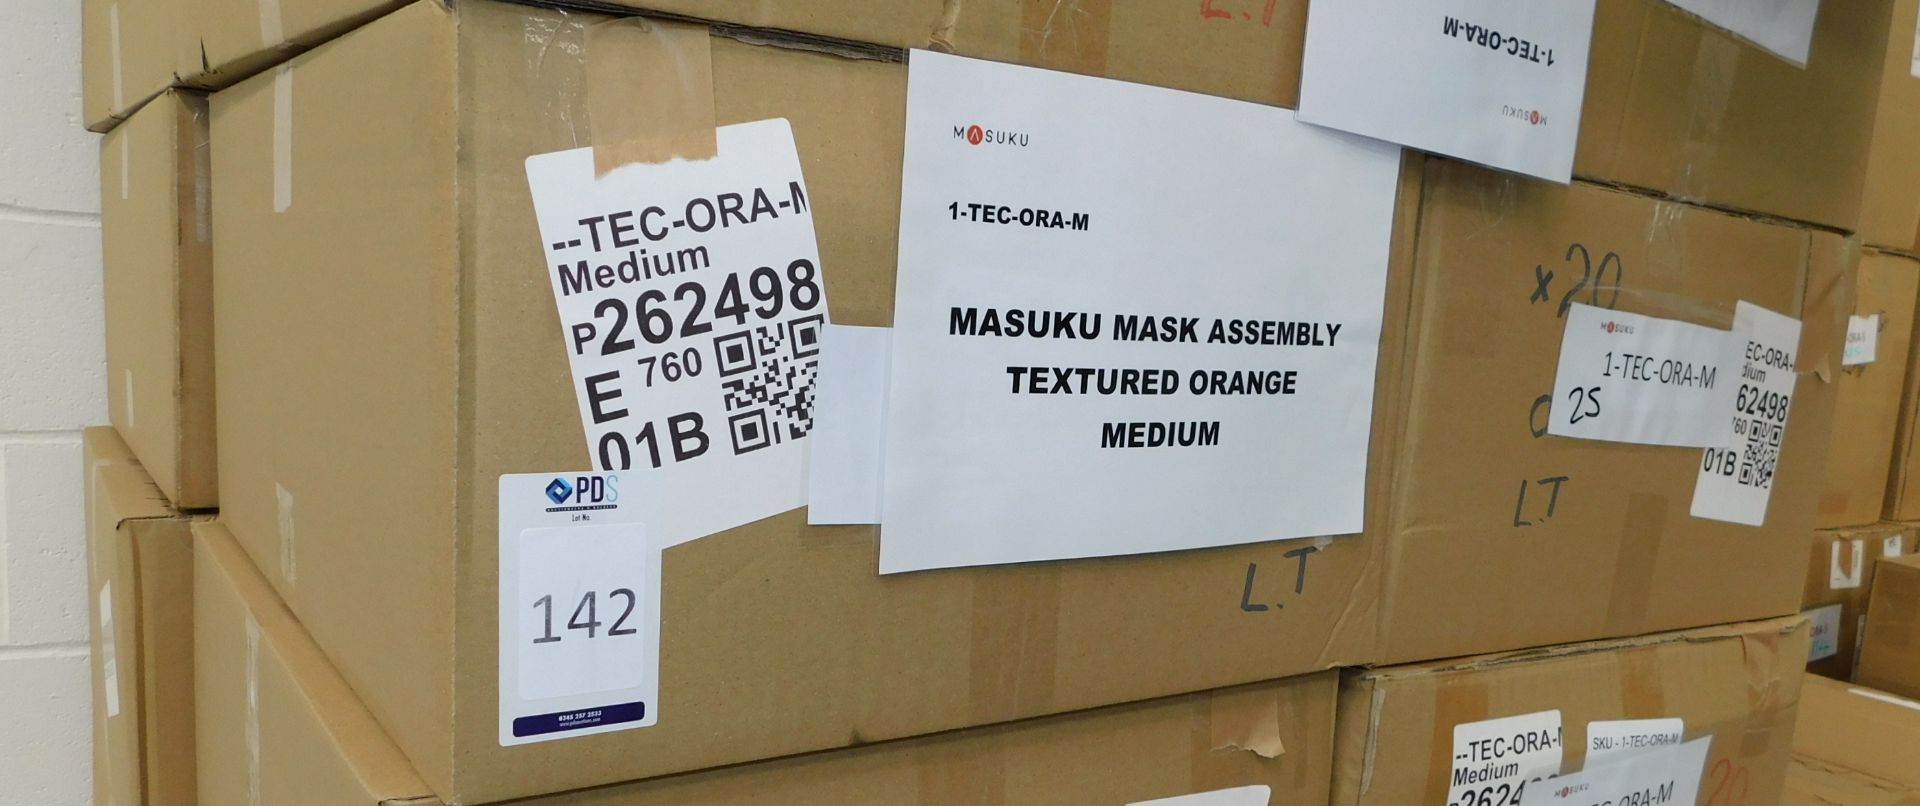 100 Masuku One Reusable Face Masks, Textured Orange, Medium (4 Boxes) - Image 3 of 3